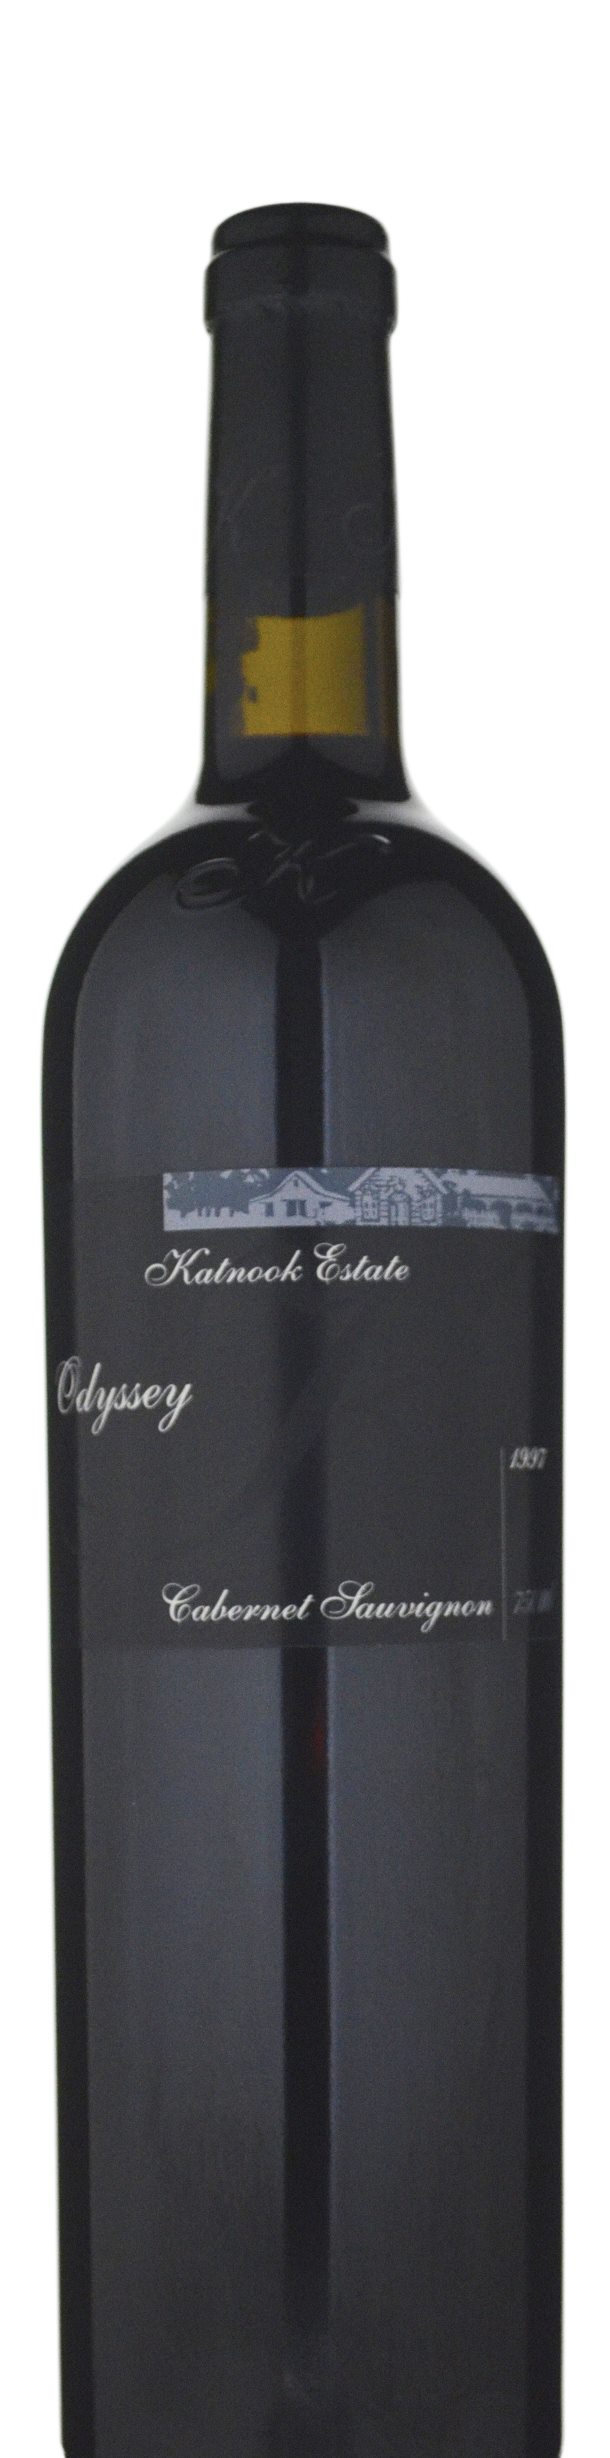 Katnook Estate Odyssey Cabernet Sauvignon 1997